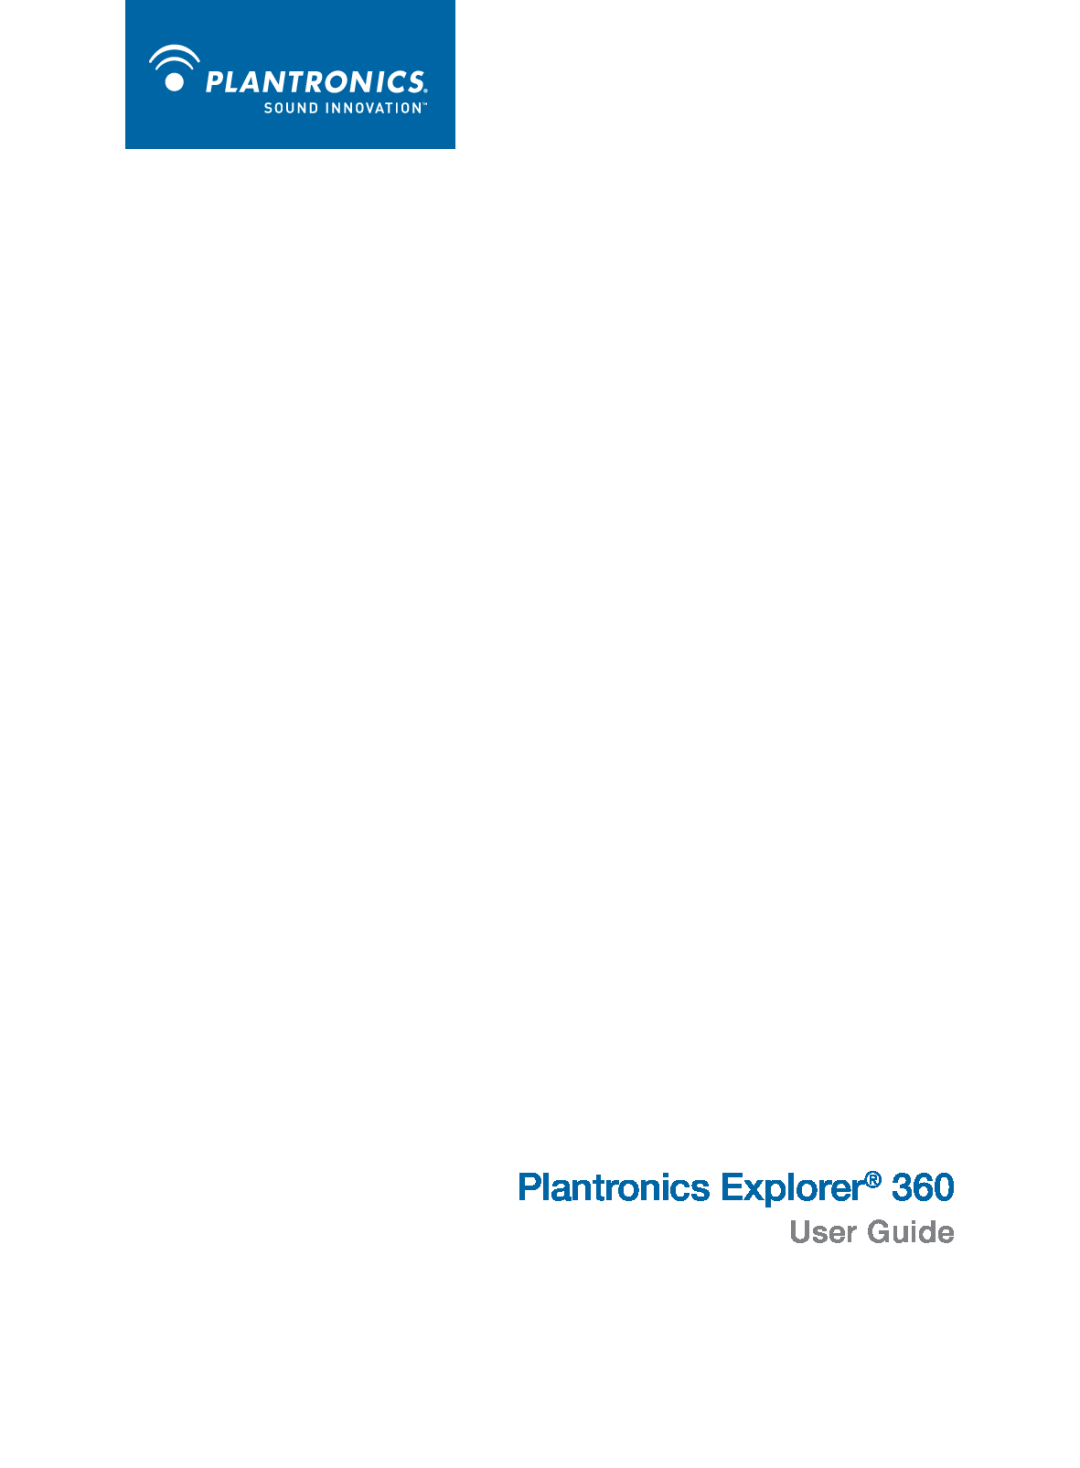 Plantronics 360 manual Plantronics Explorer, User Guide 